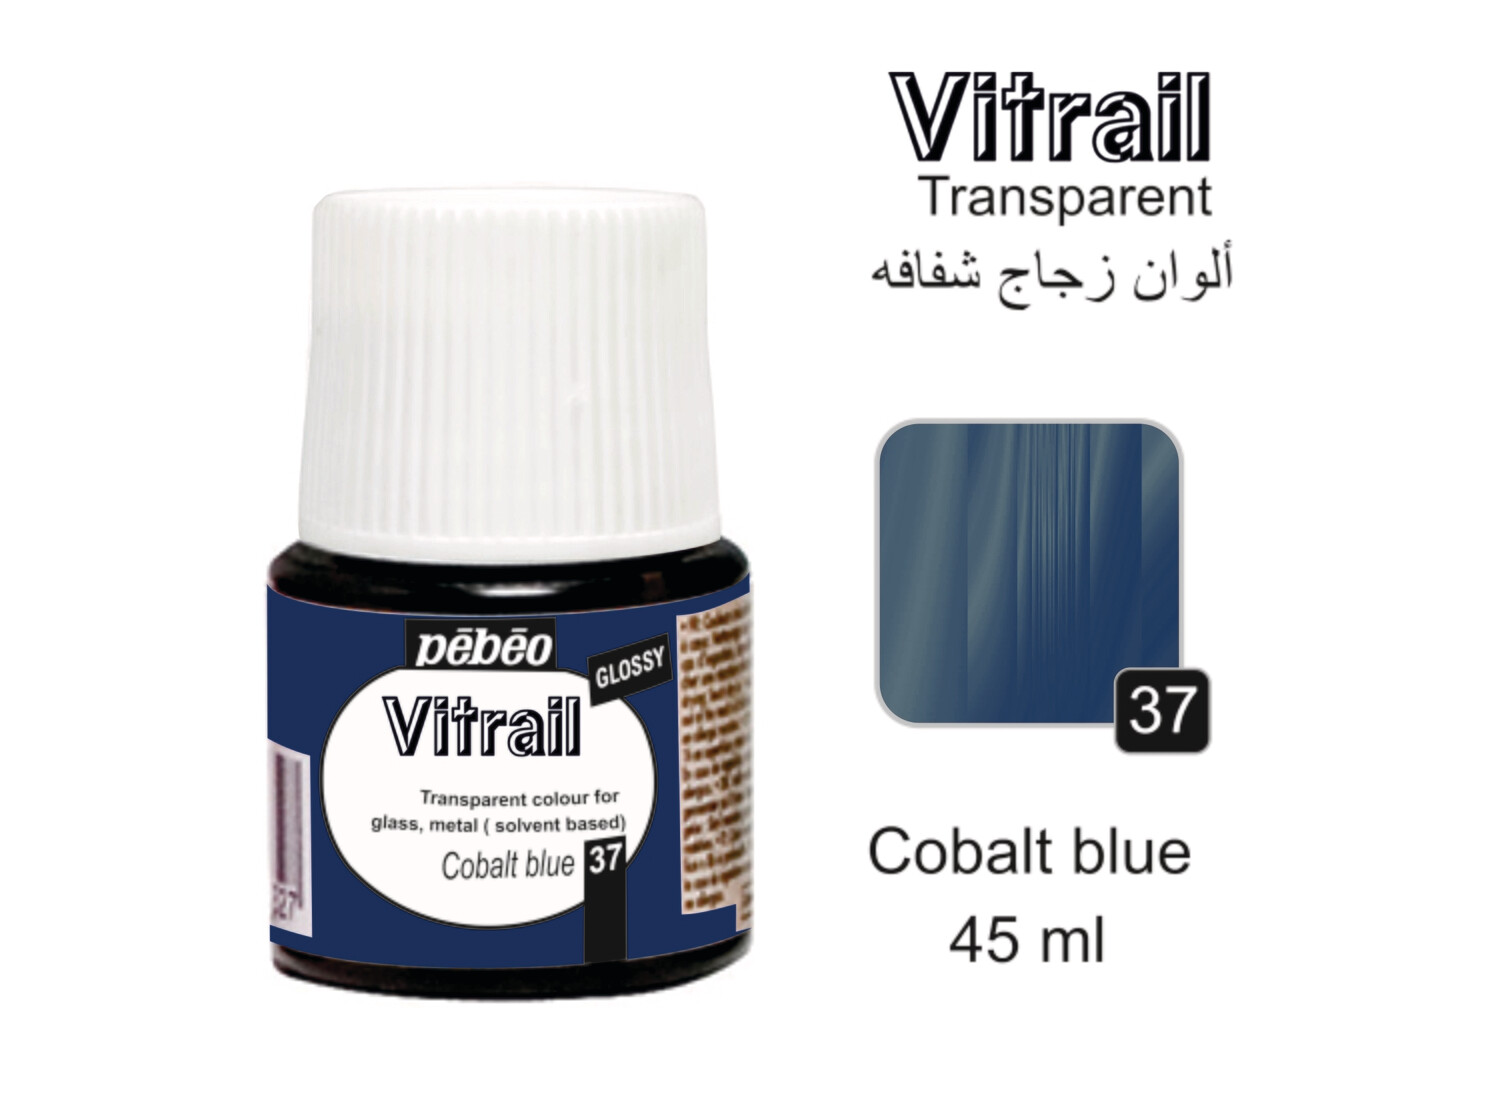 VITRAIL glass colors Cobalt blue No. 37, 45 ml